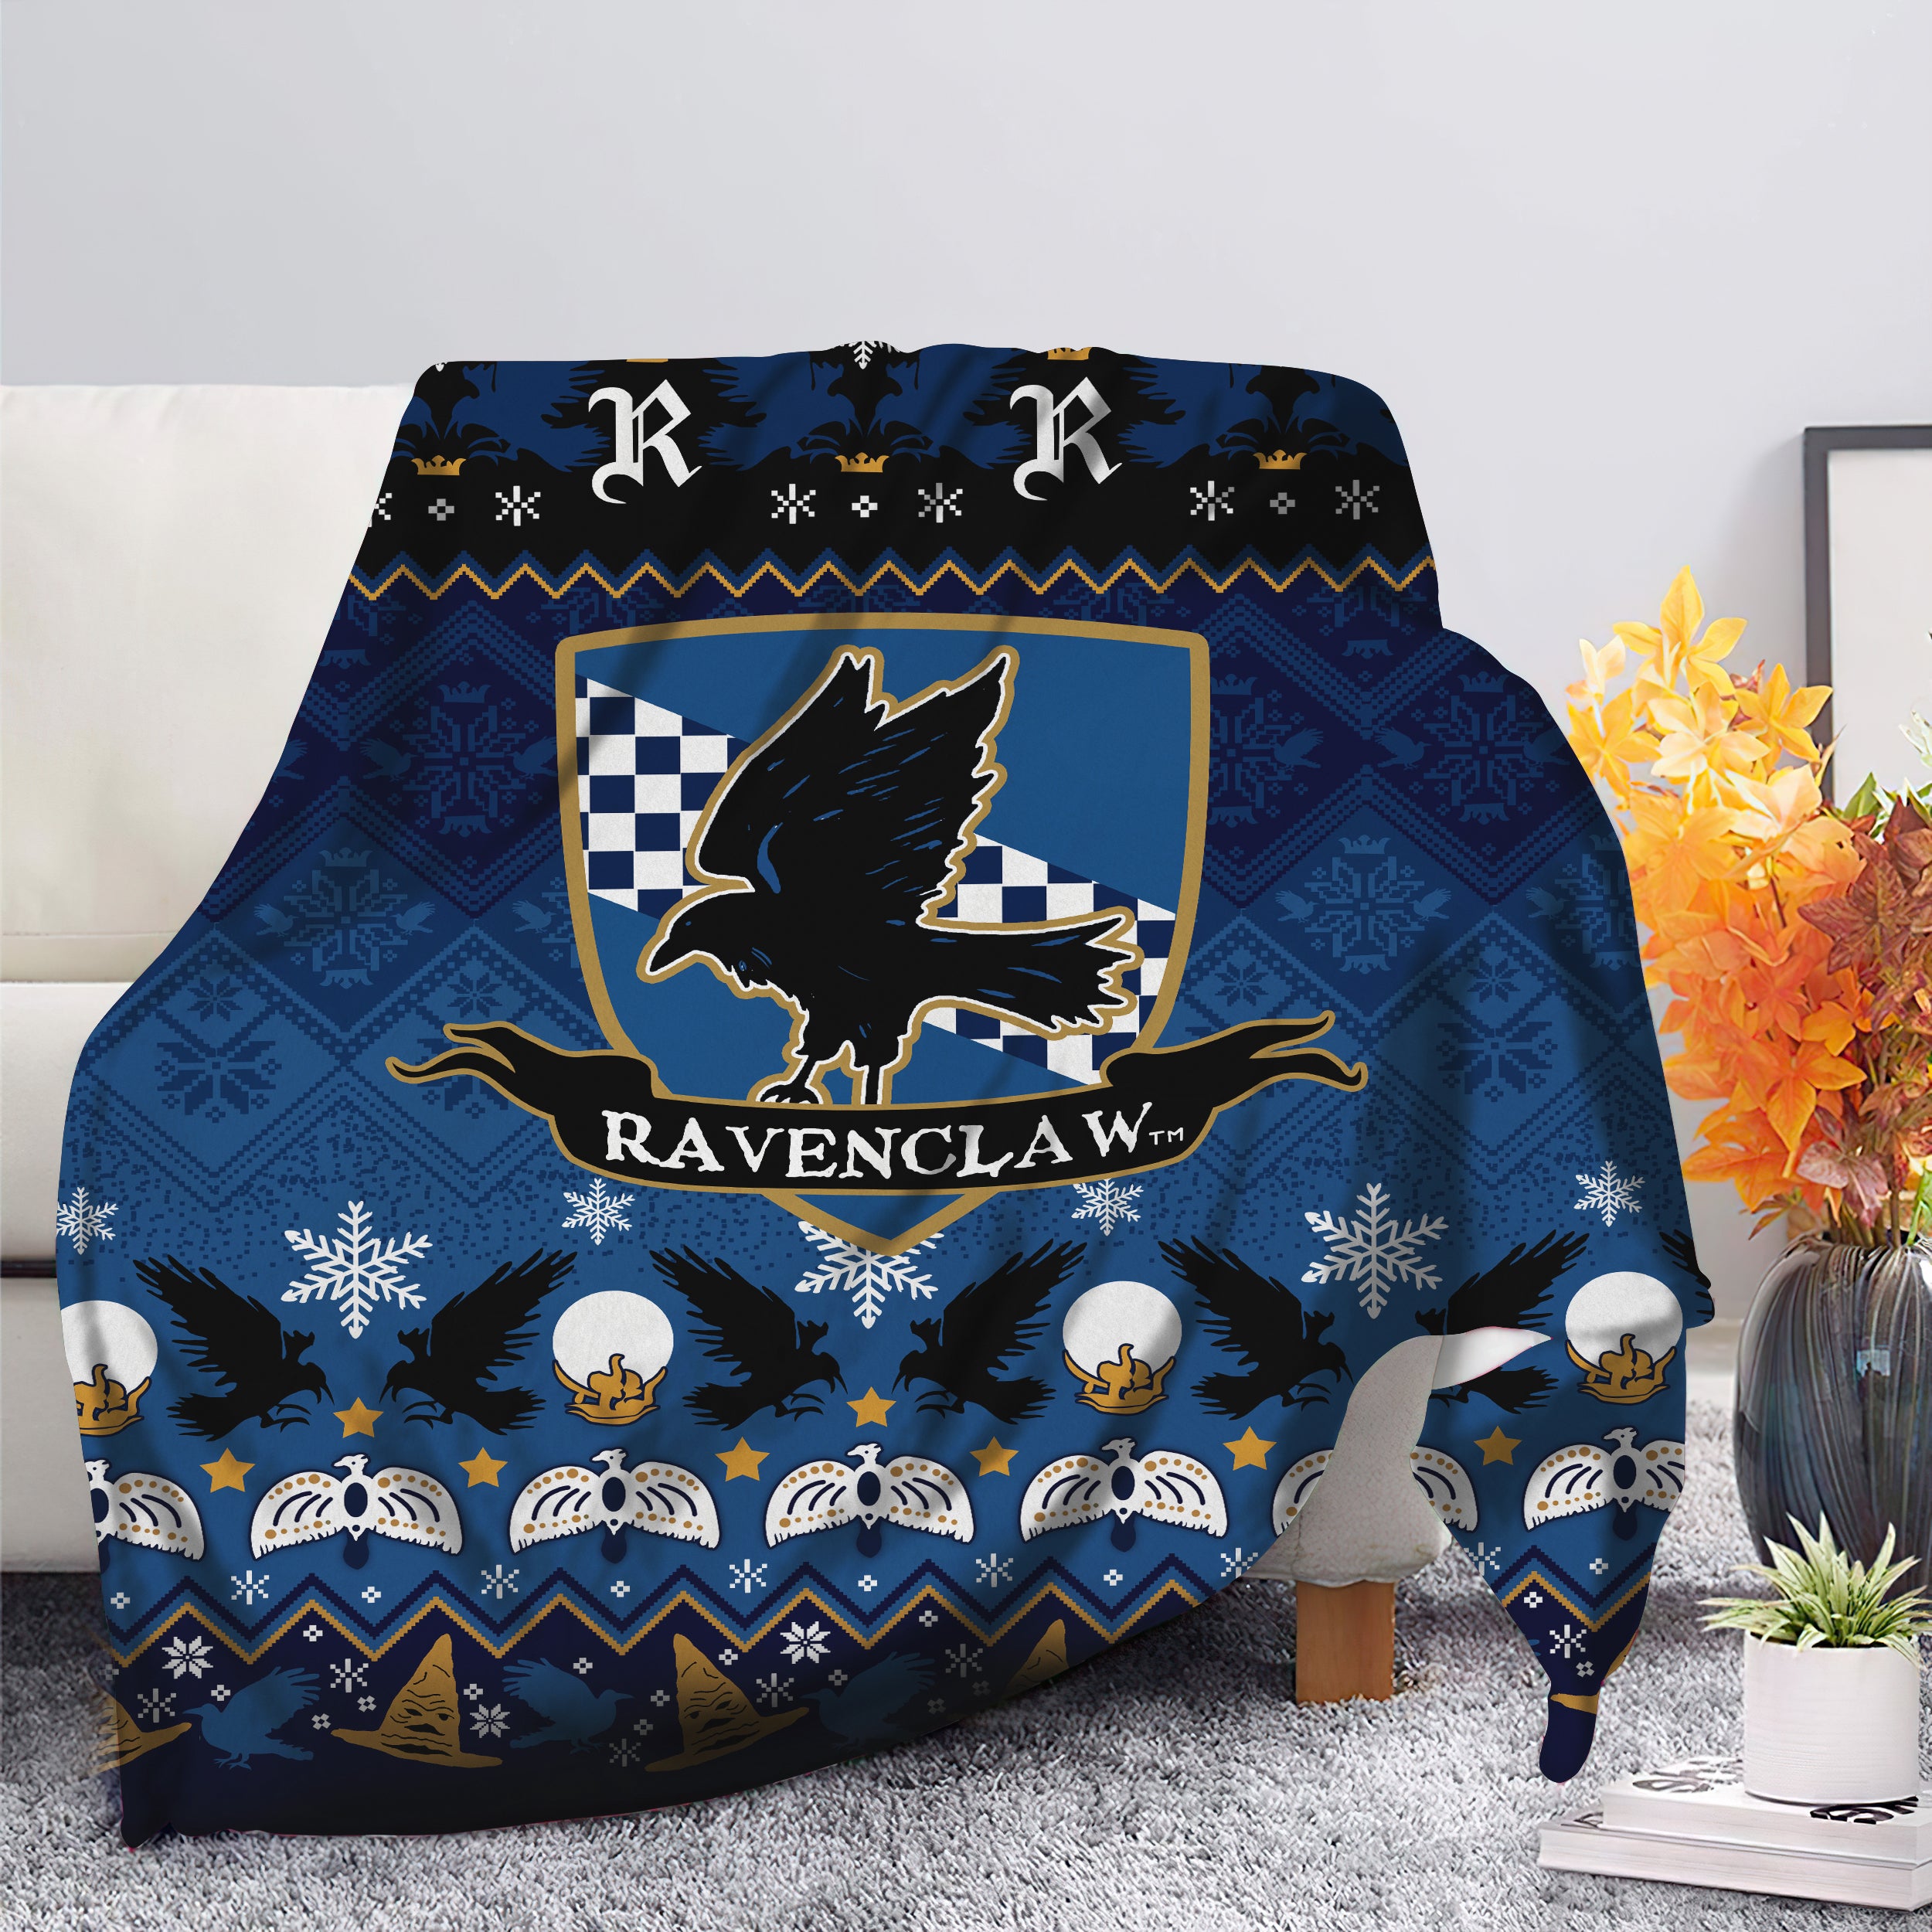 Ravenclaw Harry Potter Christmas Premium Blanket Nearkii